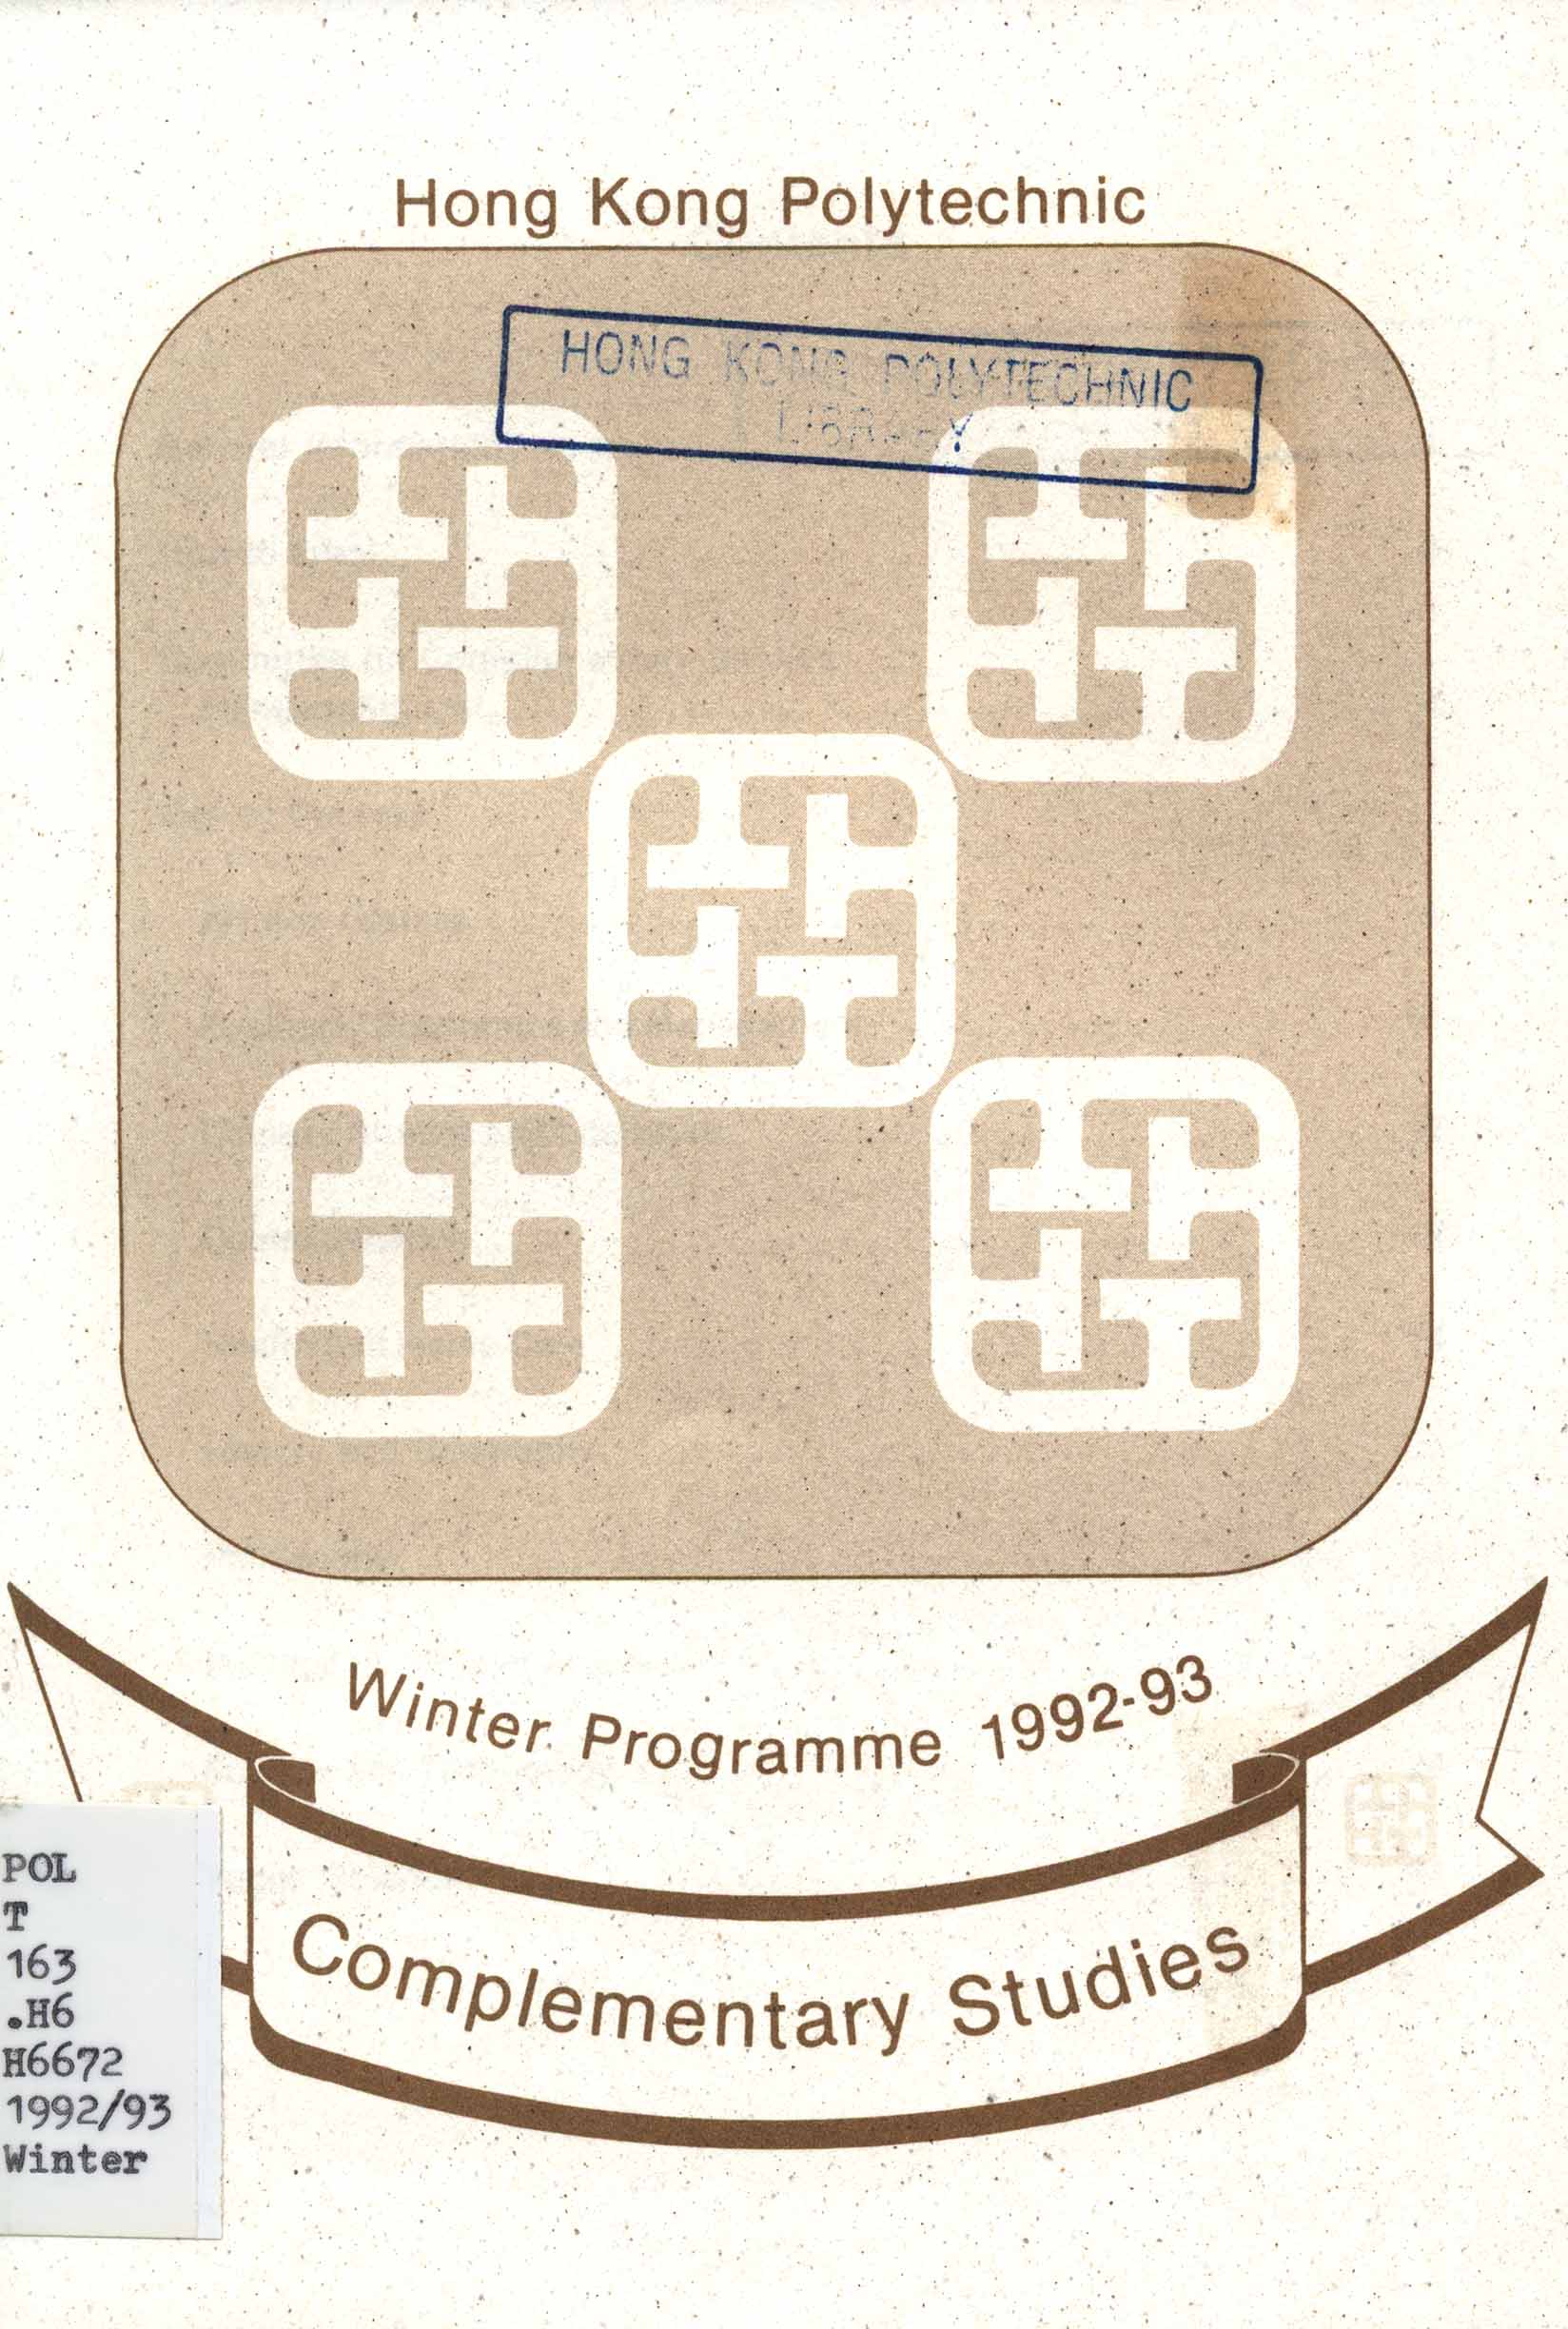 Complementary studies winter programme 1992-93